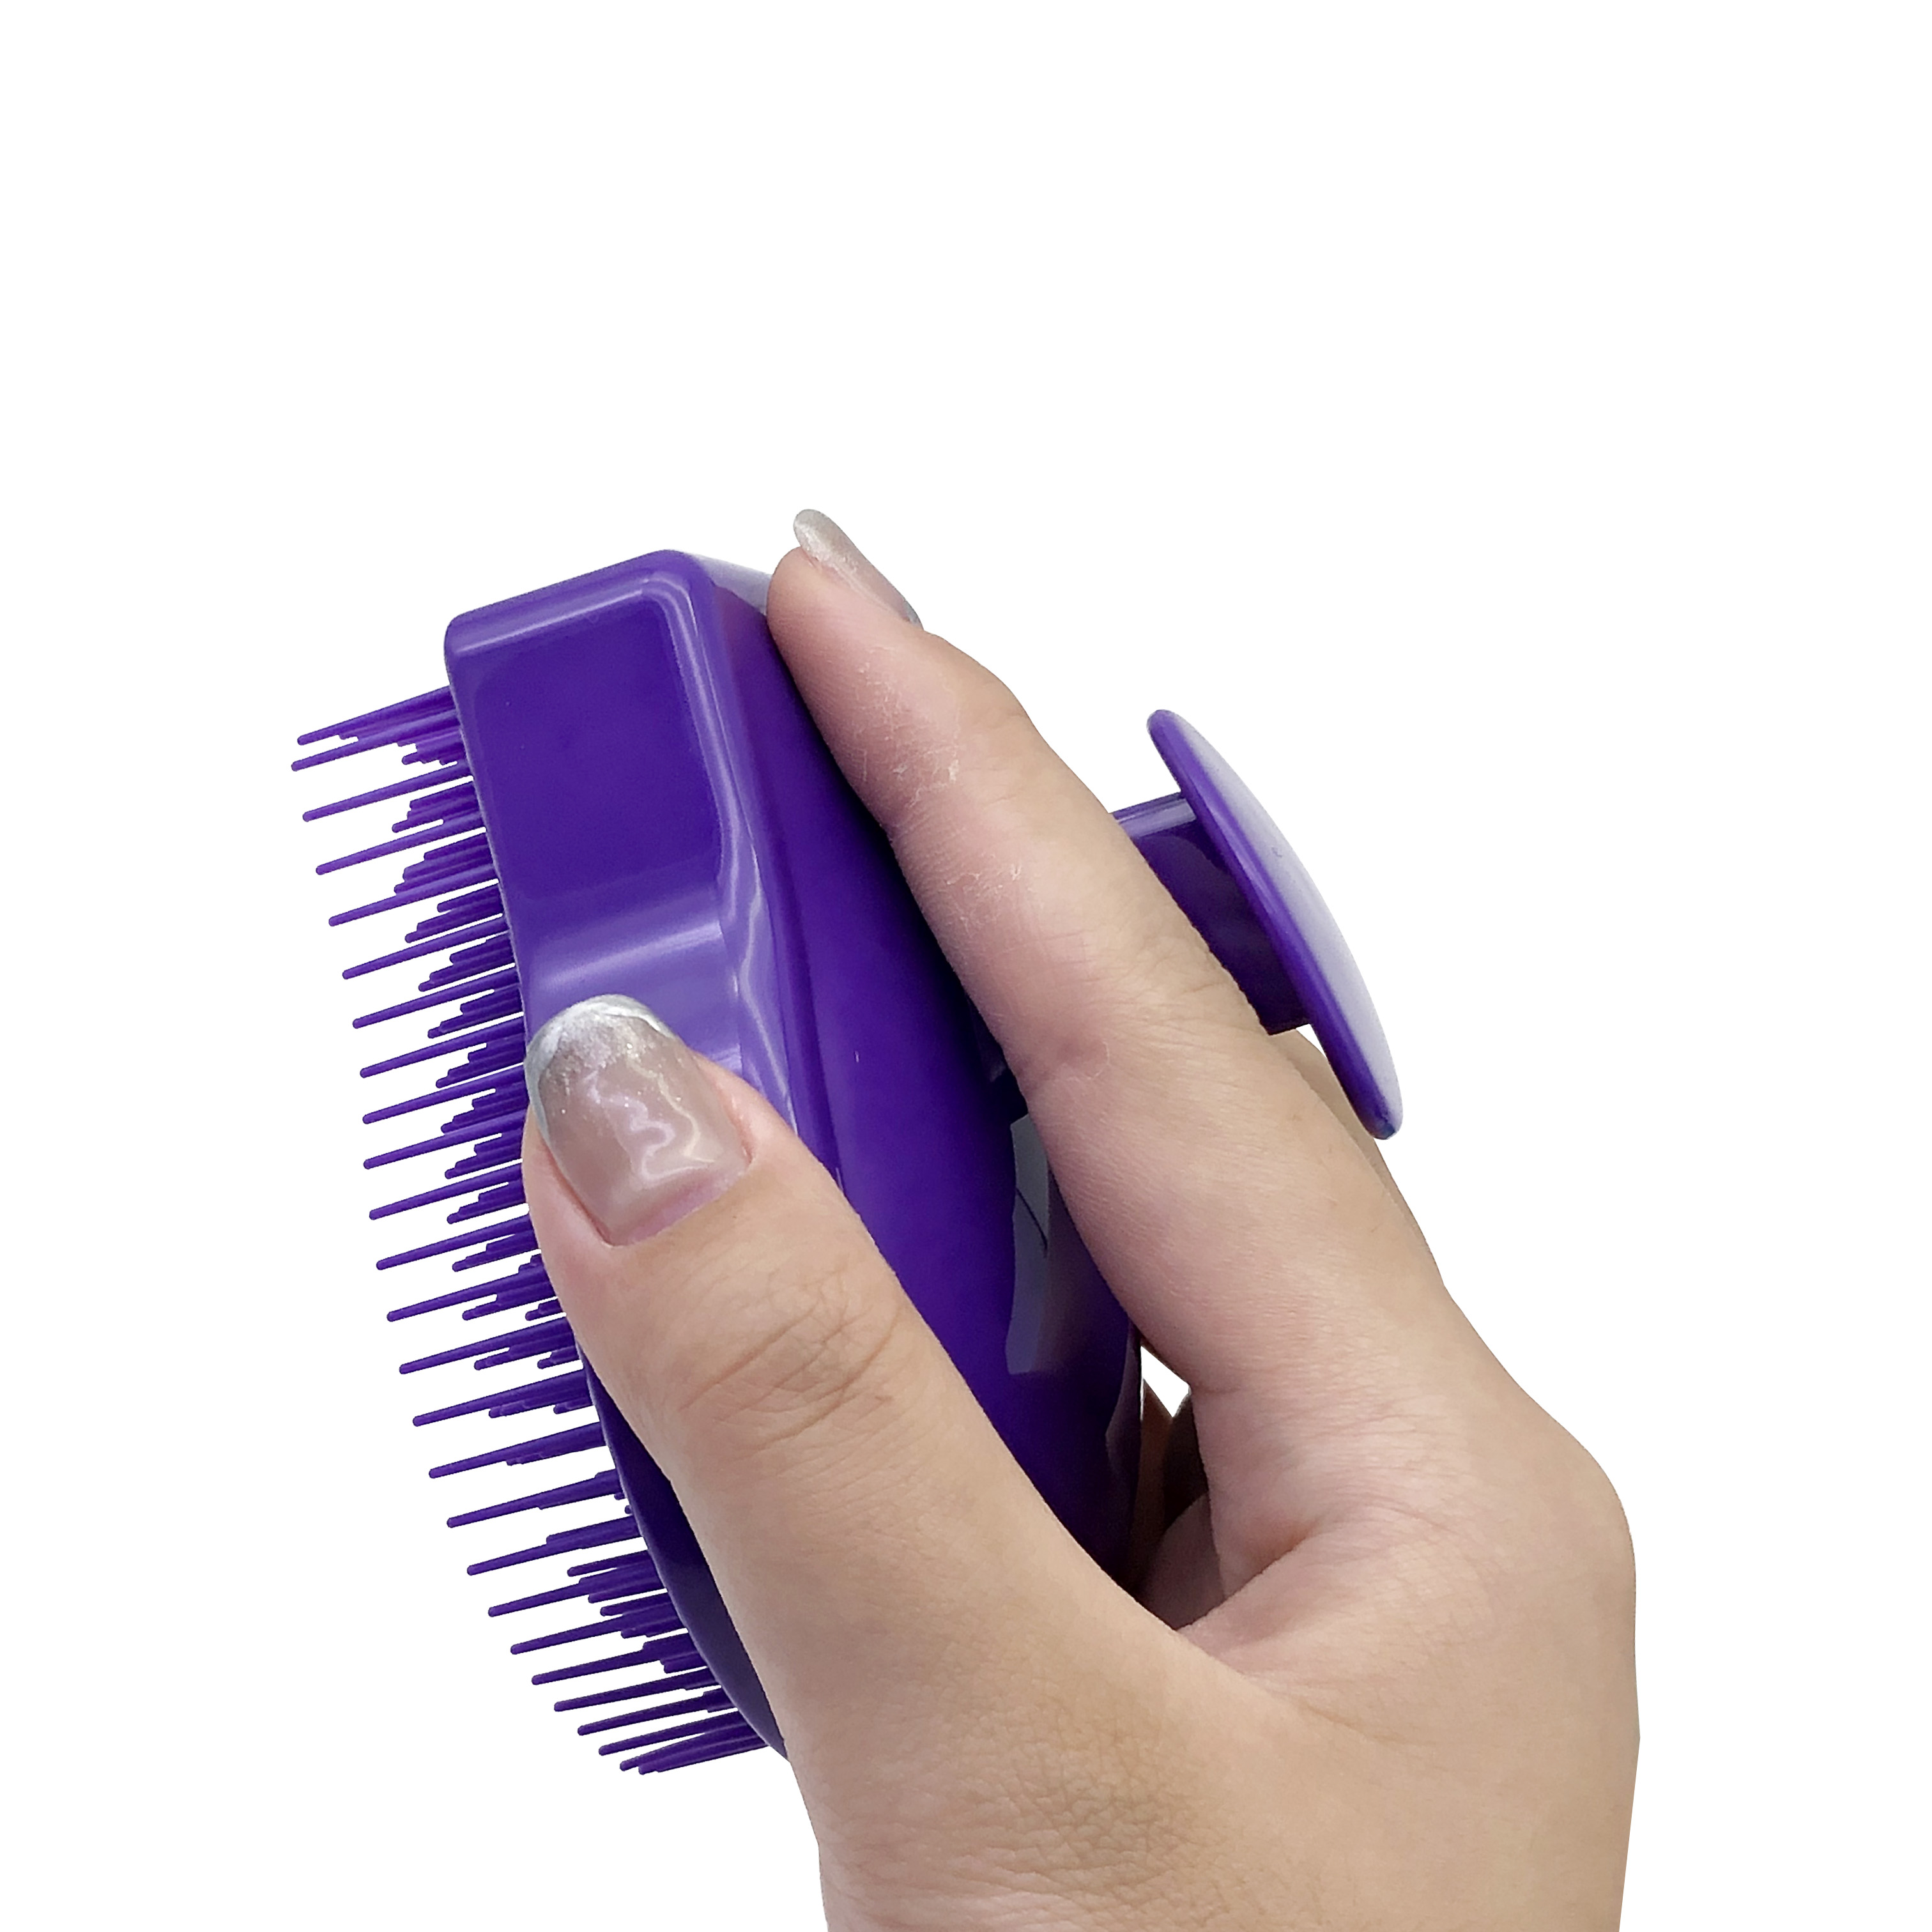 shampoo brush massager